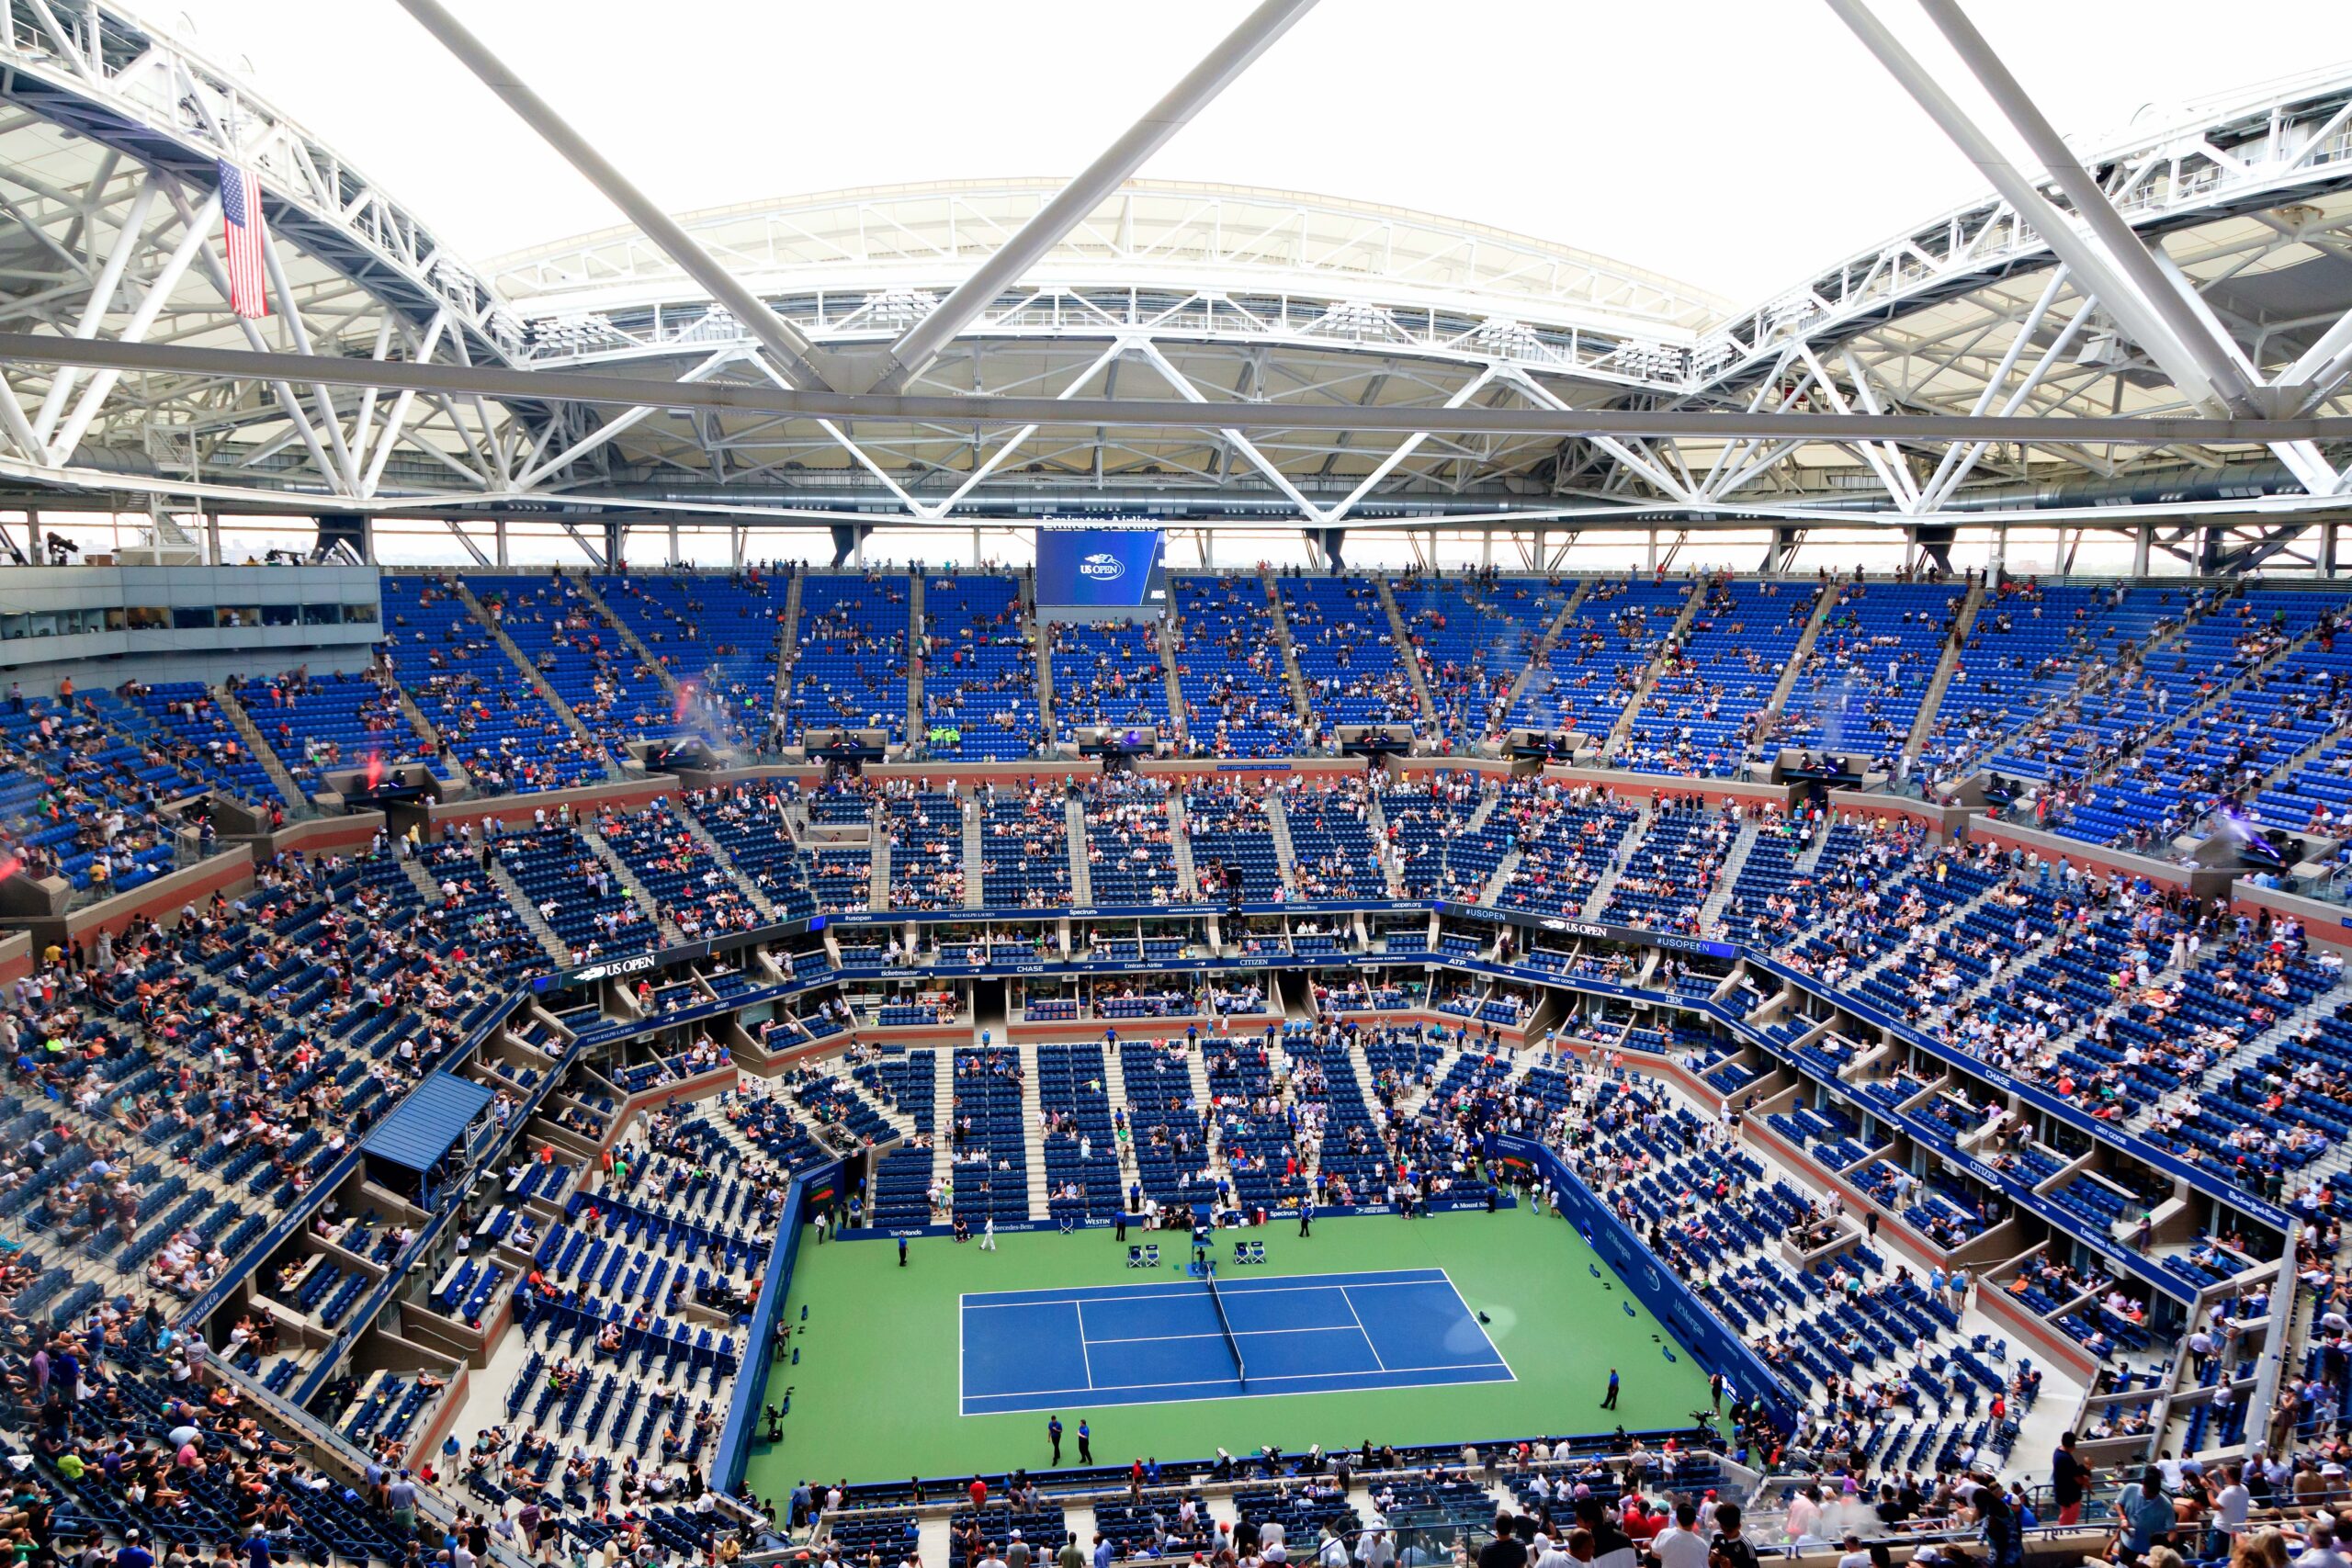 US Tennis Open stadium in New York